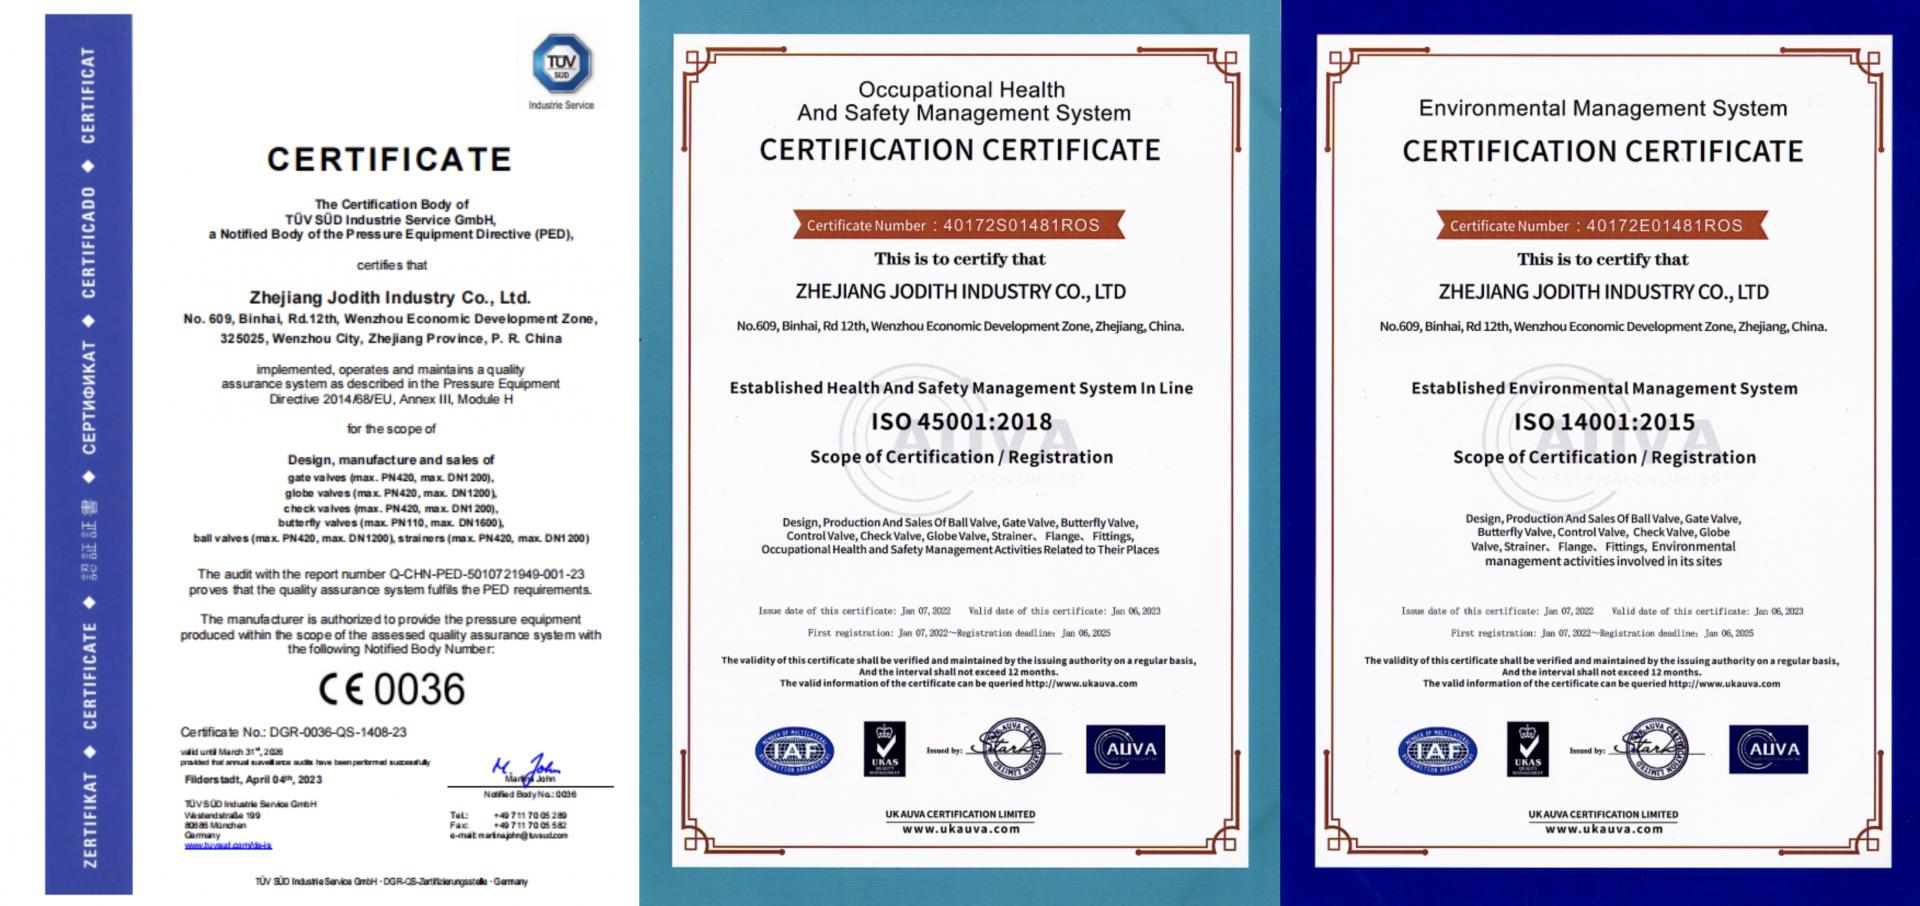 Updating of Certificates